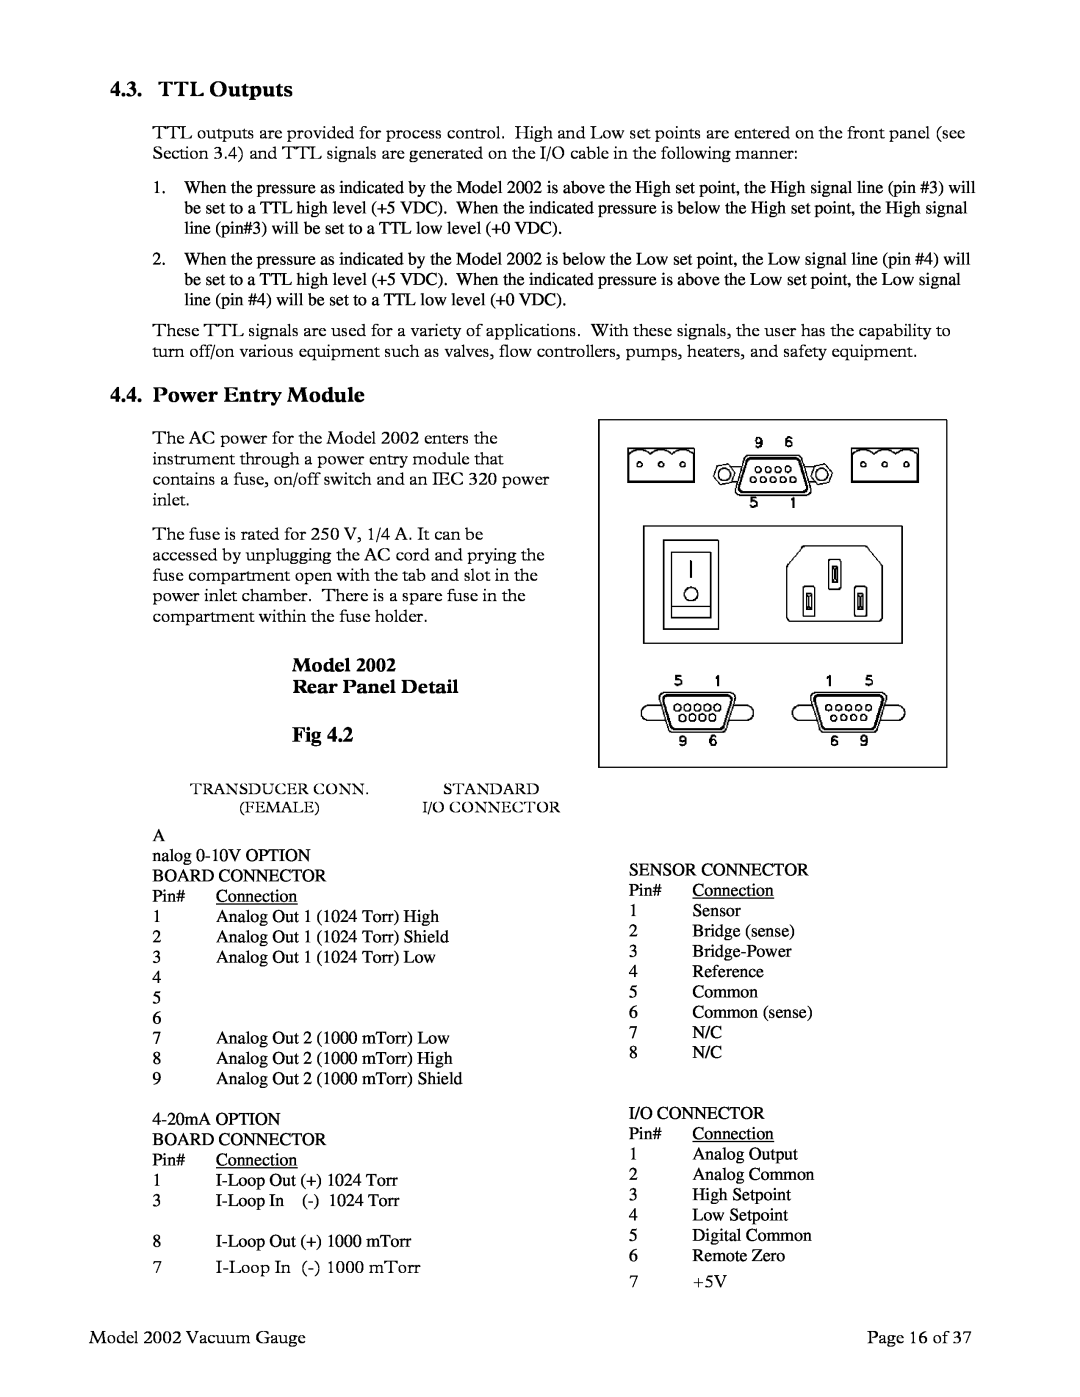 Teledyne 2002 instruction manual TTL Outputs, Power Entry Module, Model Rear Panel Detail 